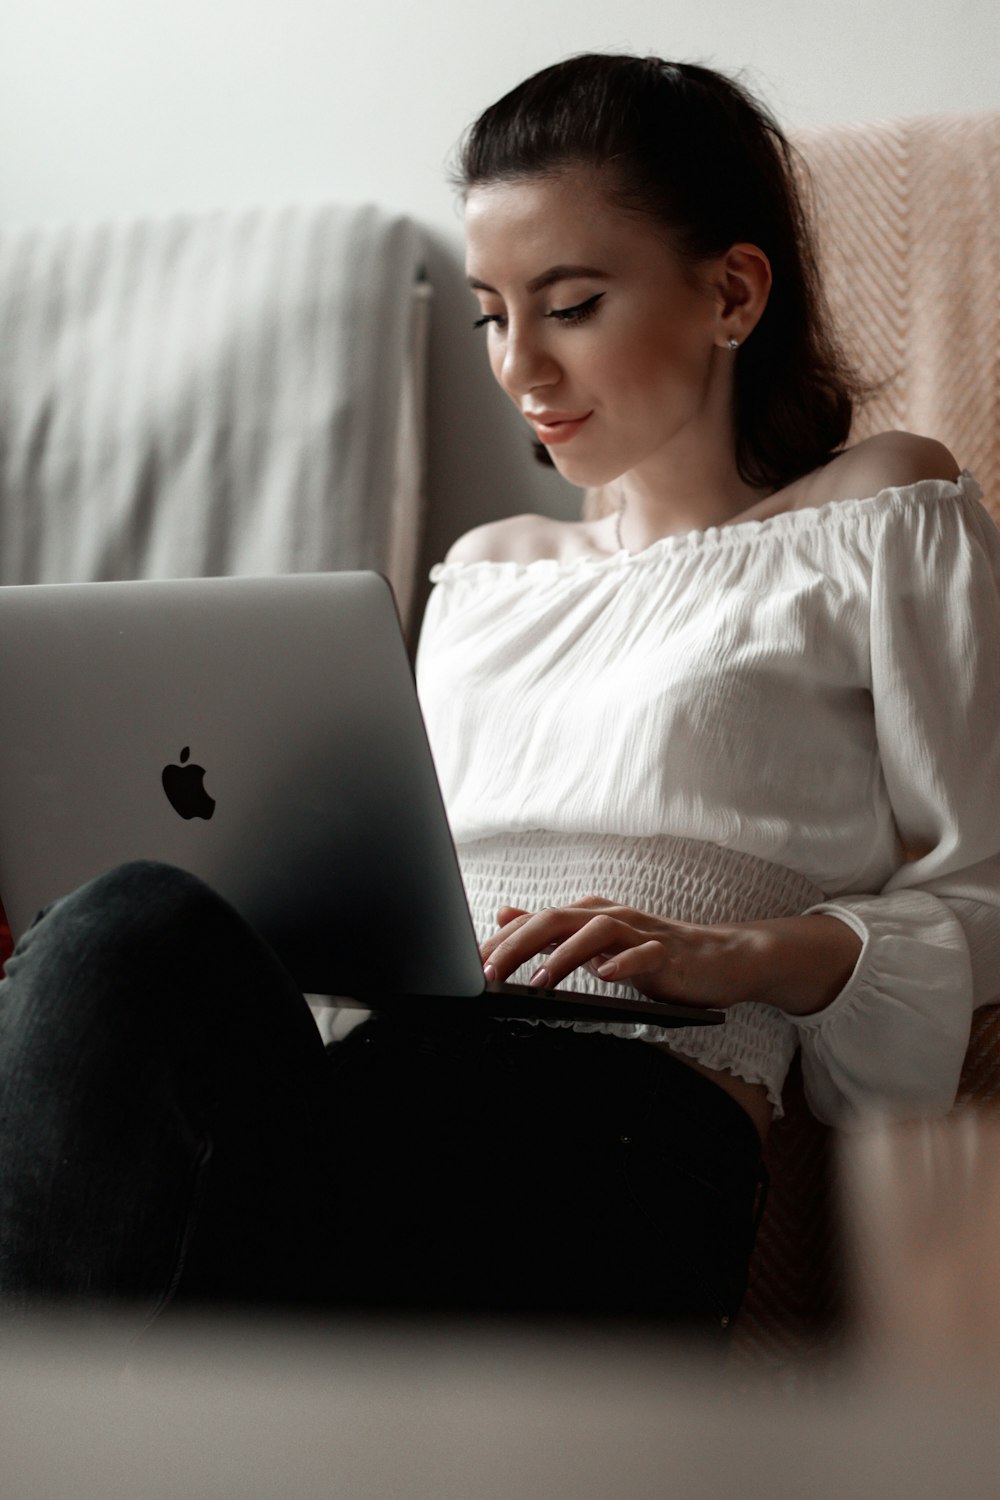 MacBookを使用した白い長袖シャツの女性